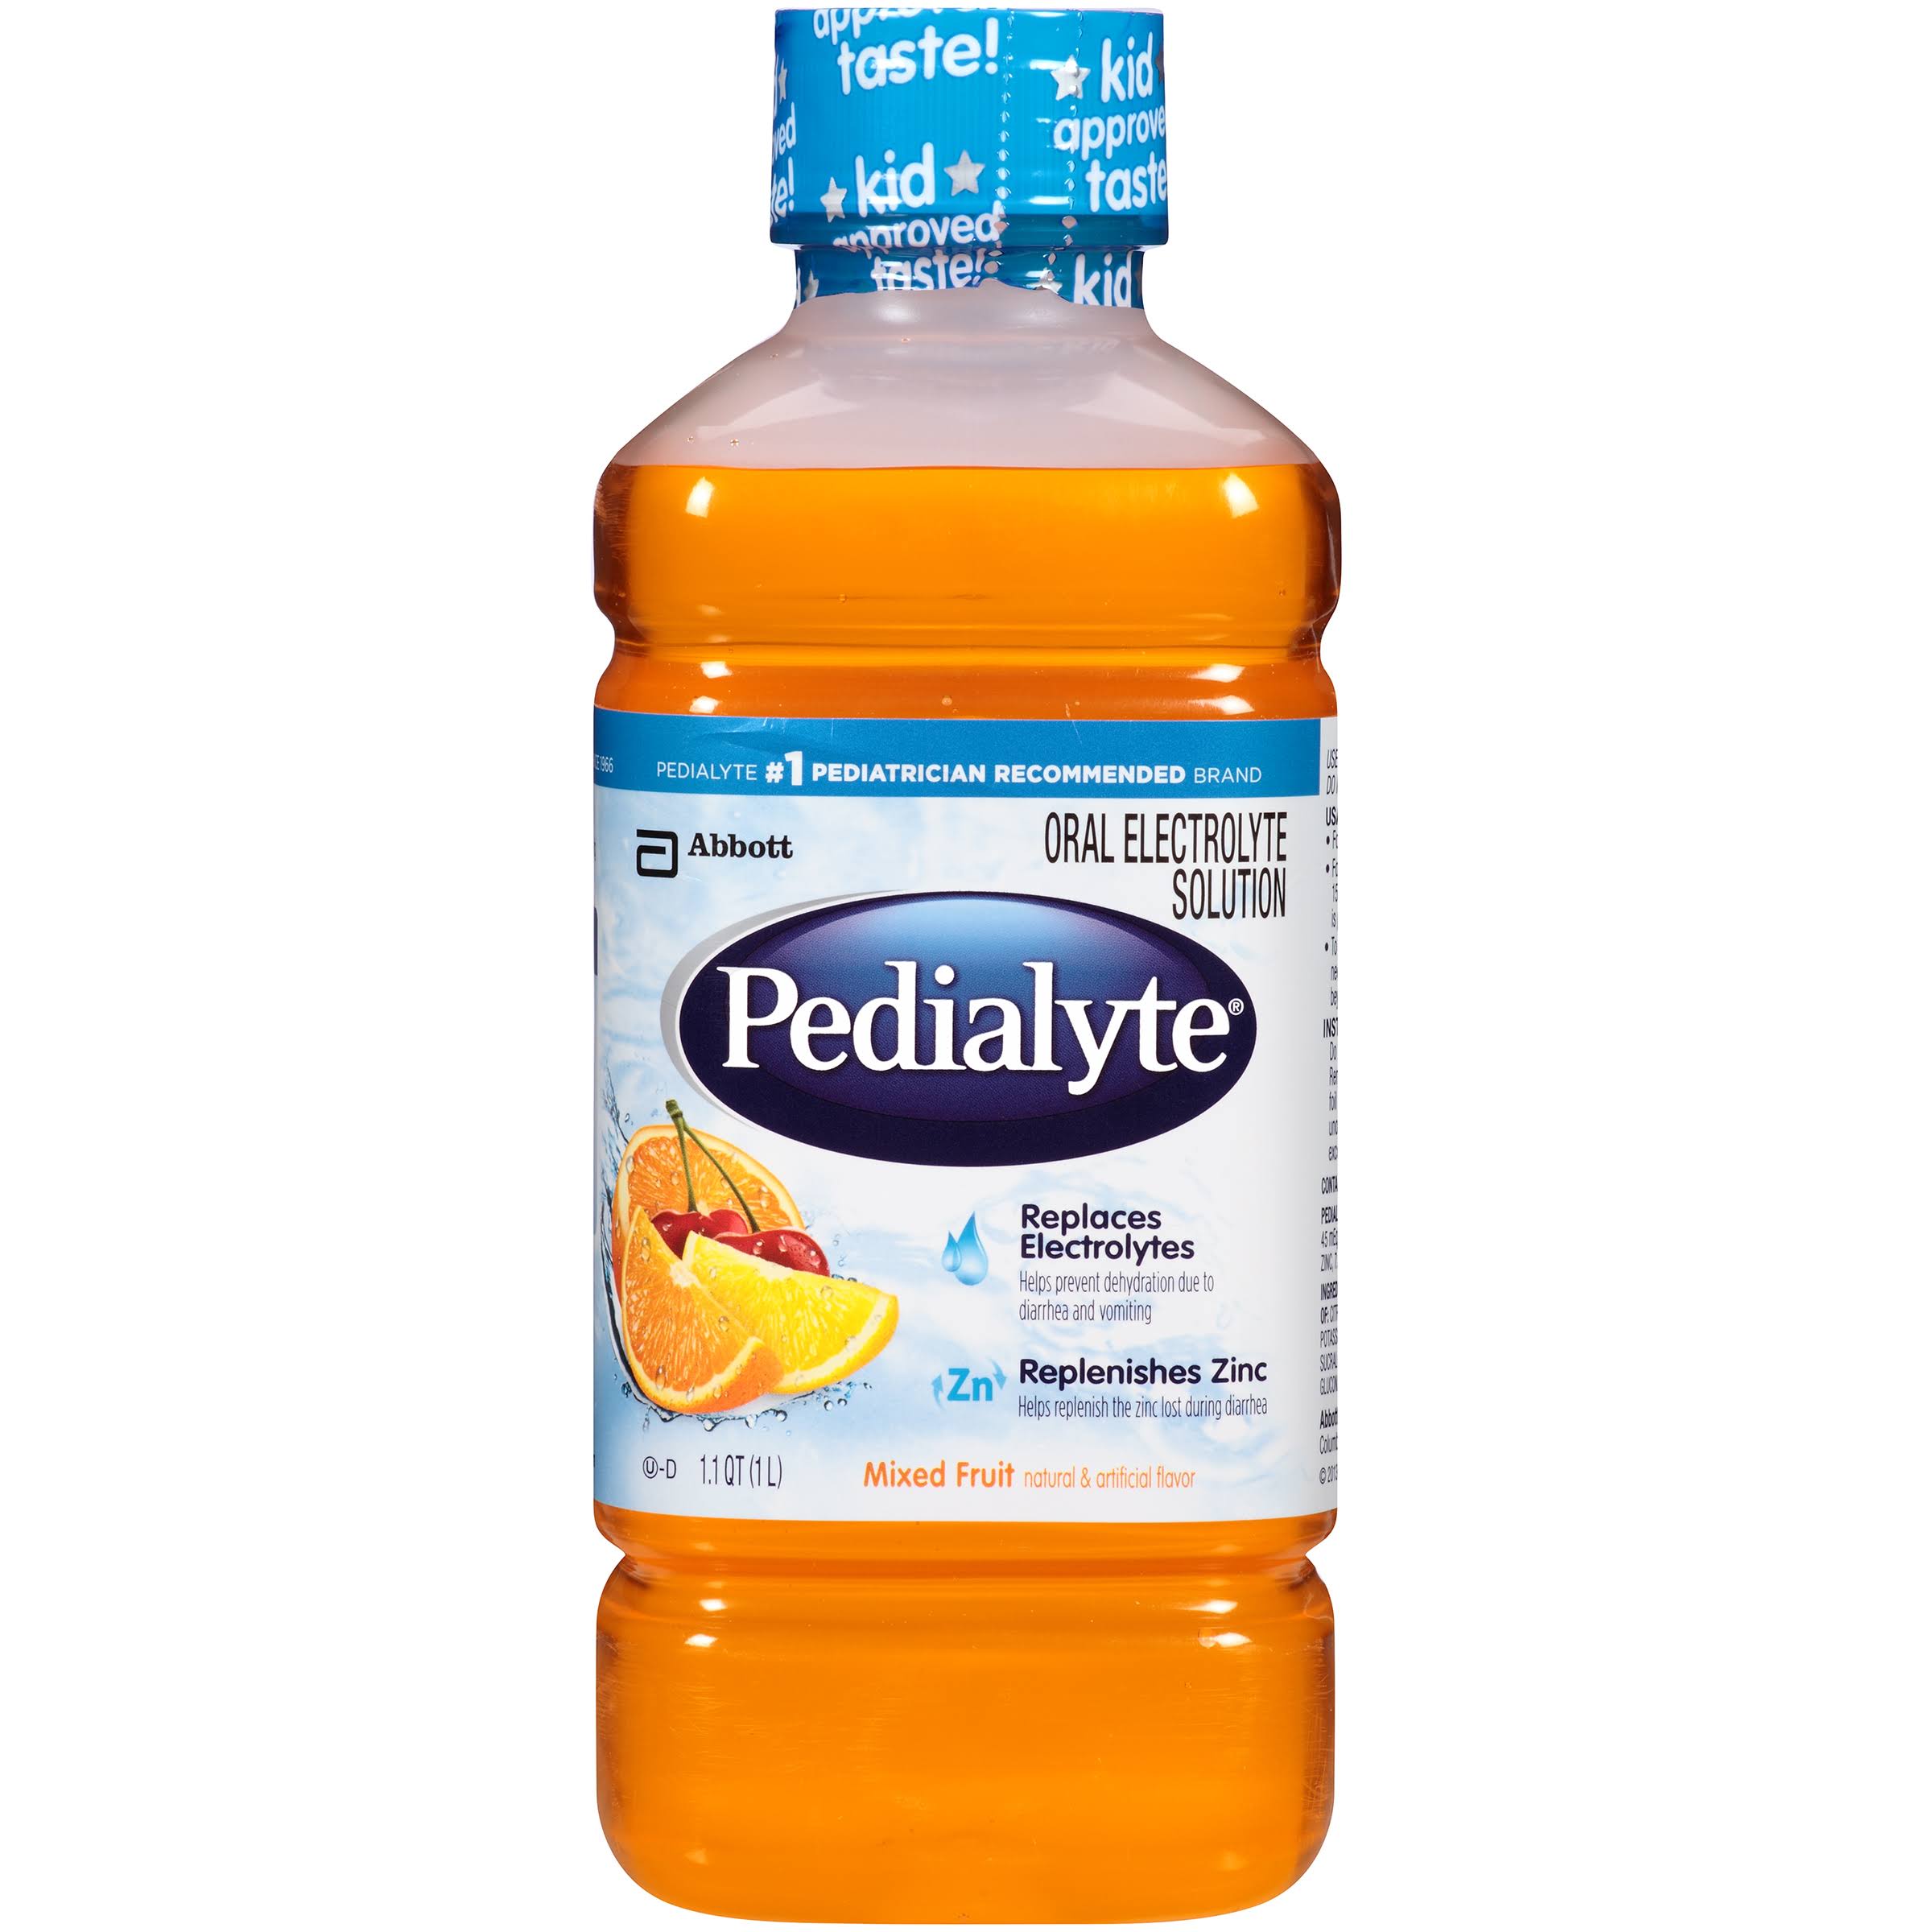 Abbott Pedialyte Electrolyte Solution - 1.1qt, Mixed Fruit